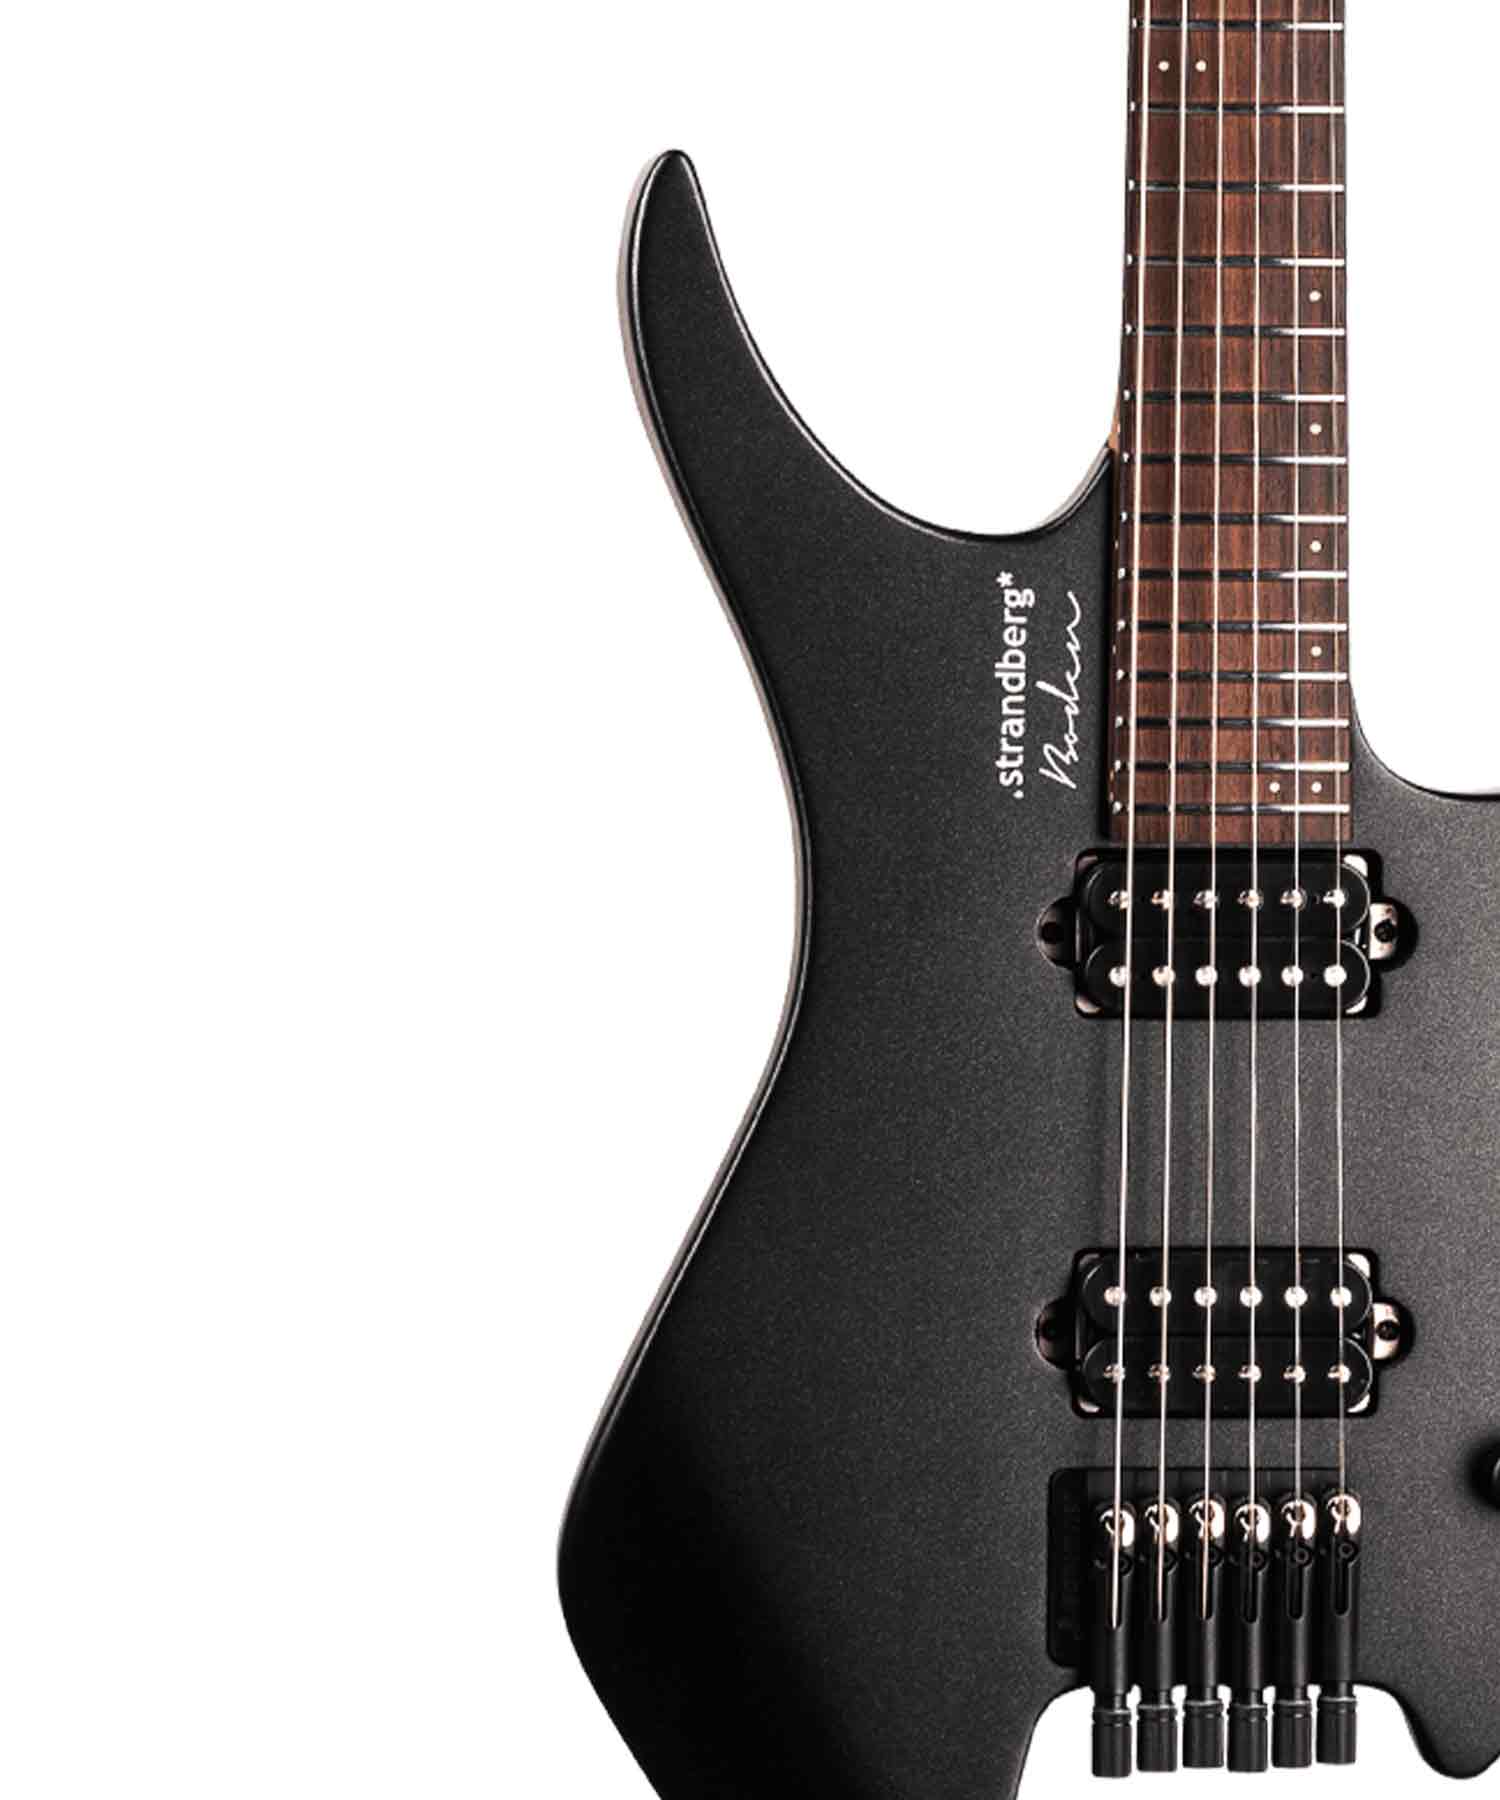 Strandberg Boden Essential 6 Electric Guitar, Black Granite